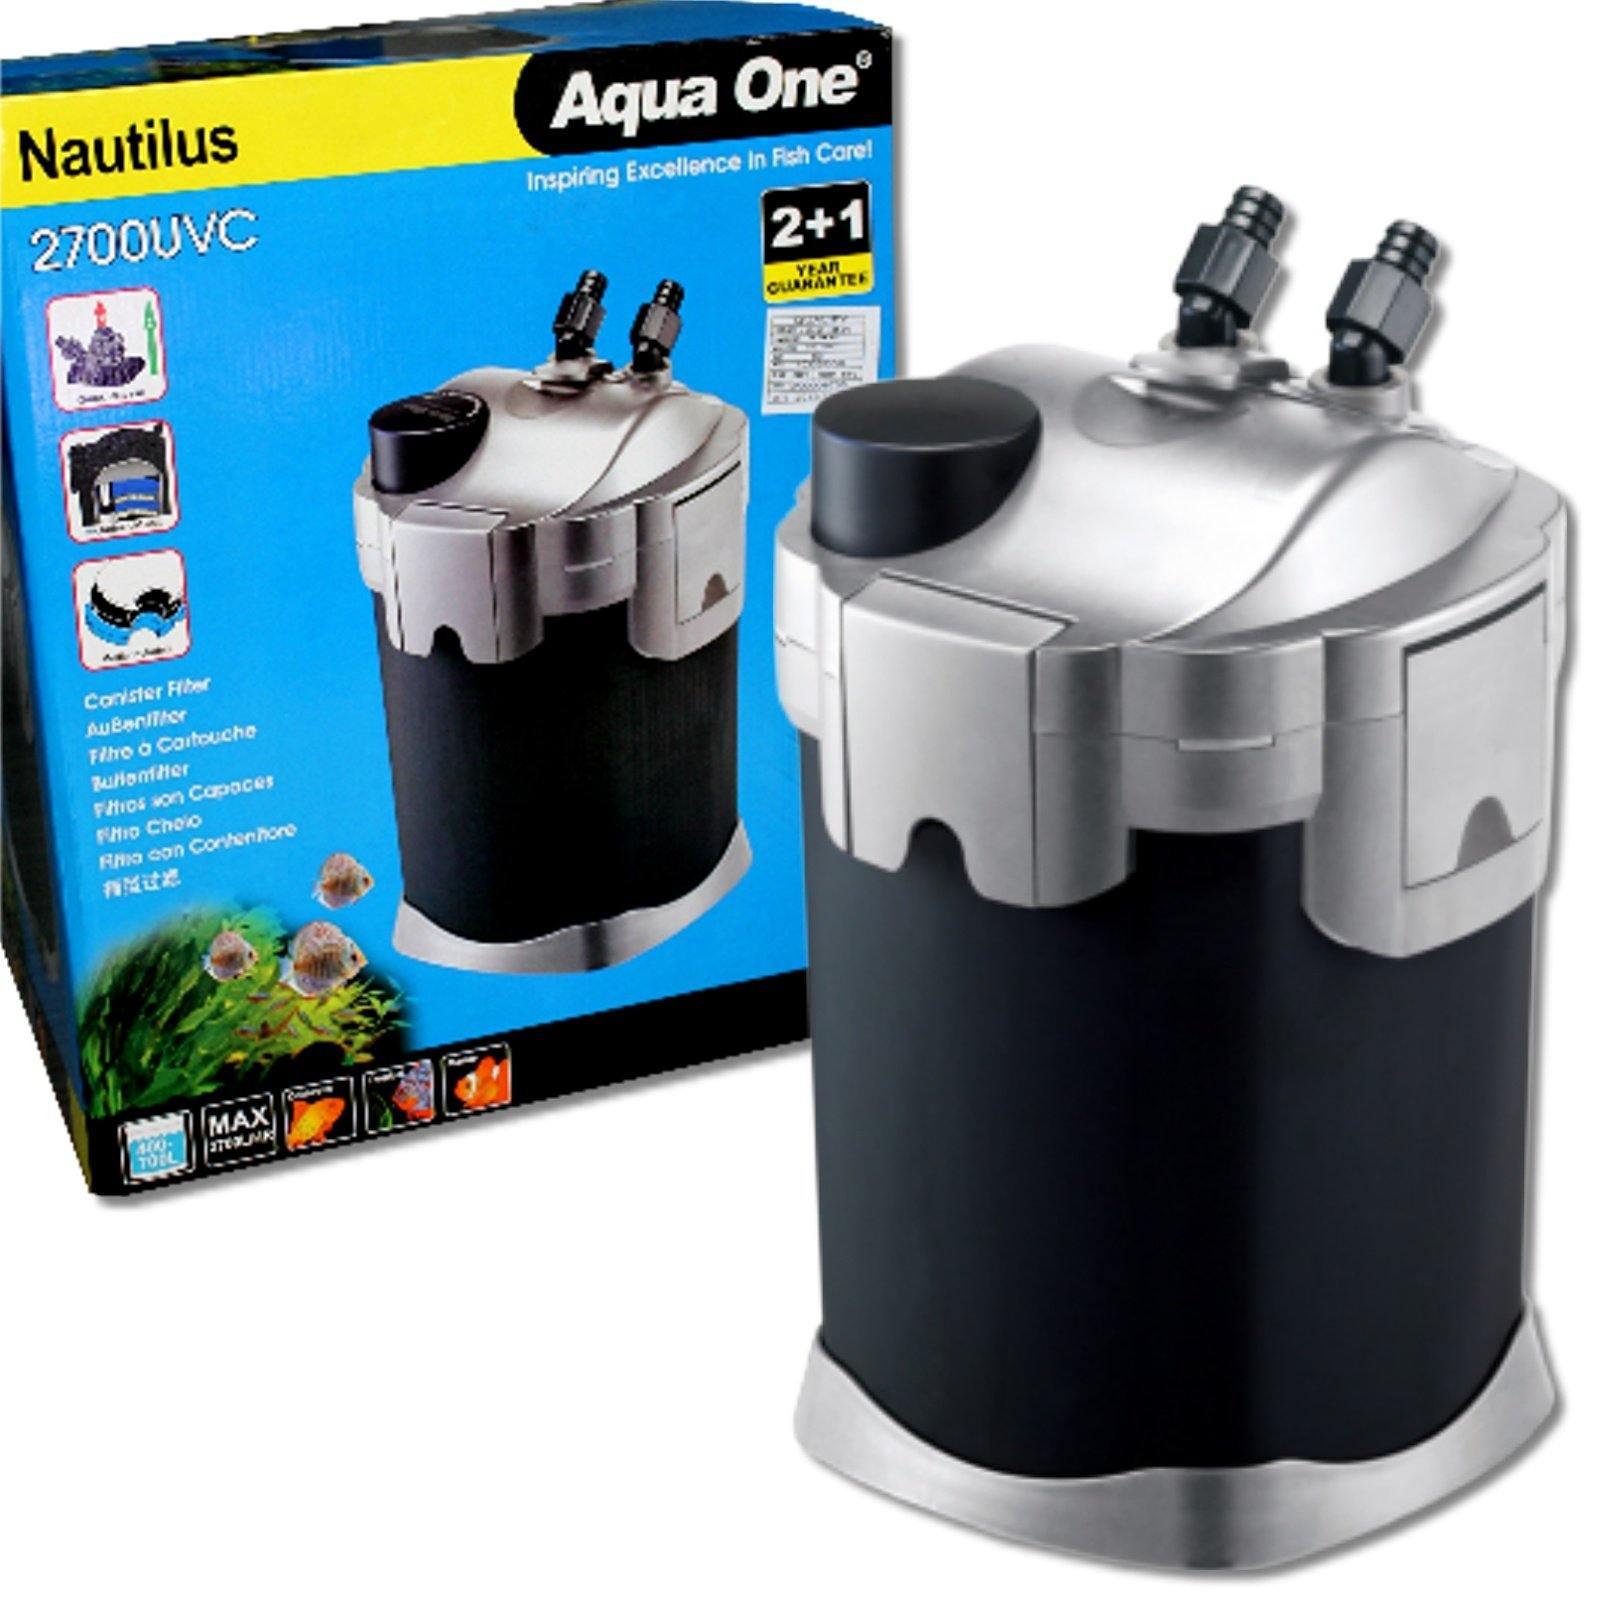 Aqua One Nautilus 2700 UV Canister Filter